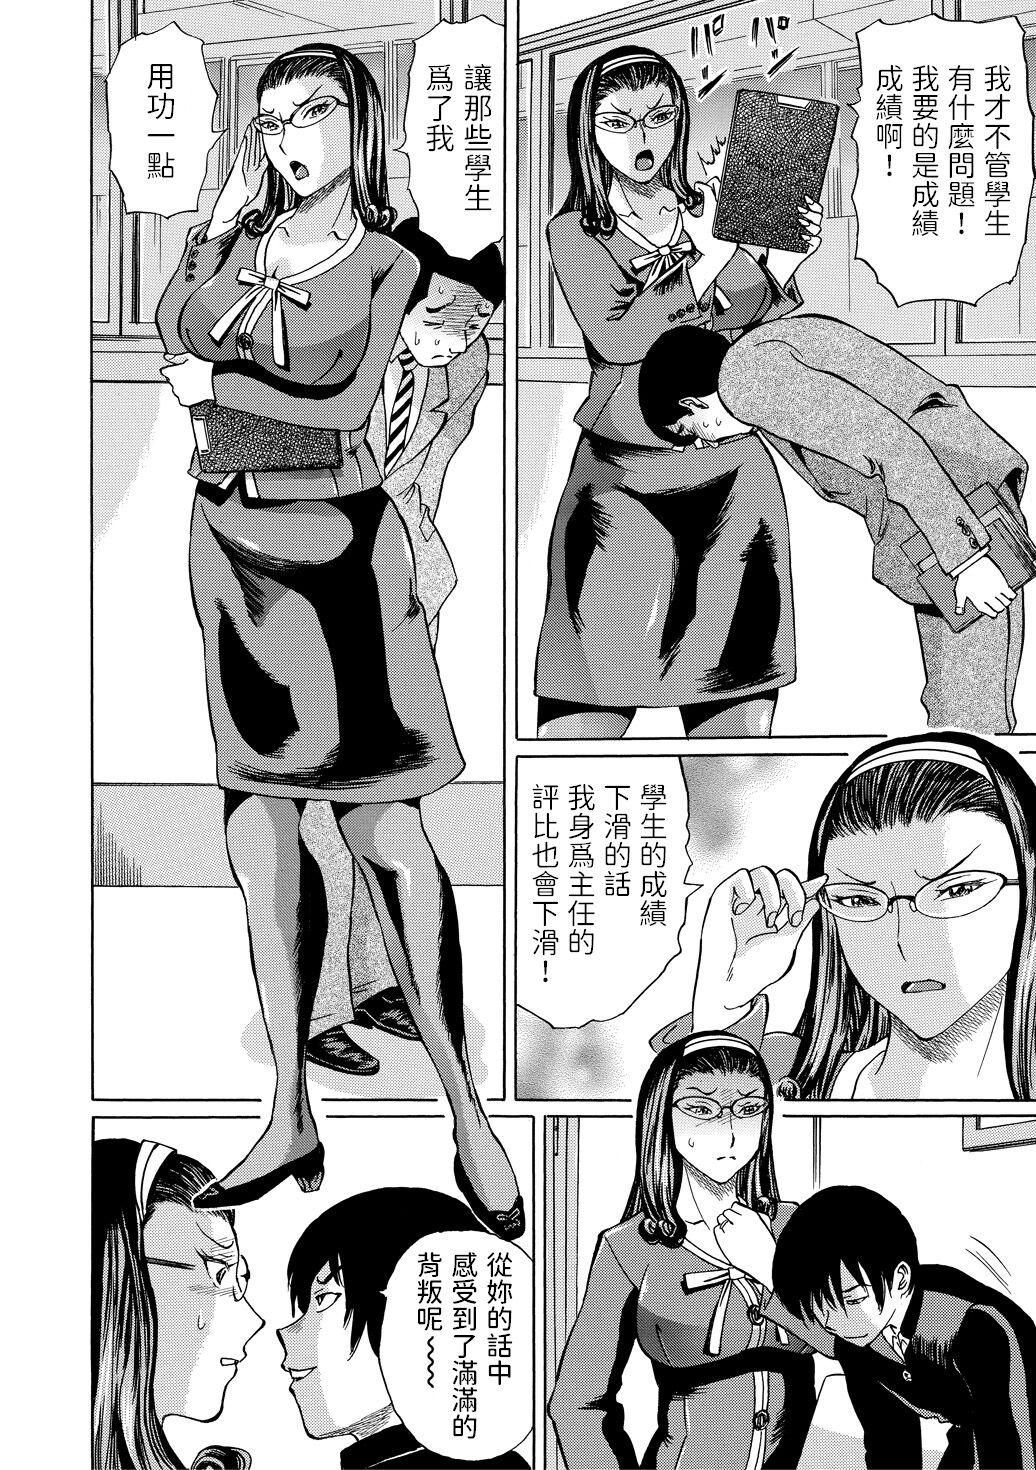 Load Kyoutou Sensei no Shuutai Massage - Page 4